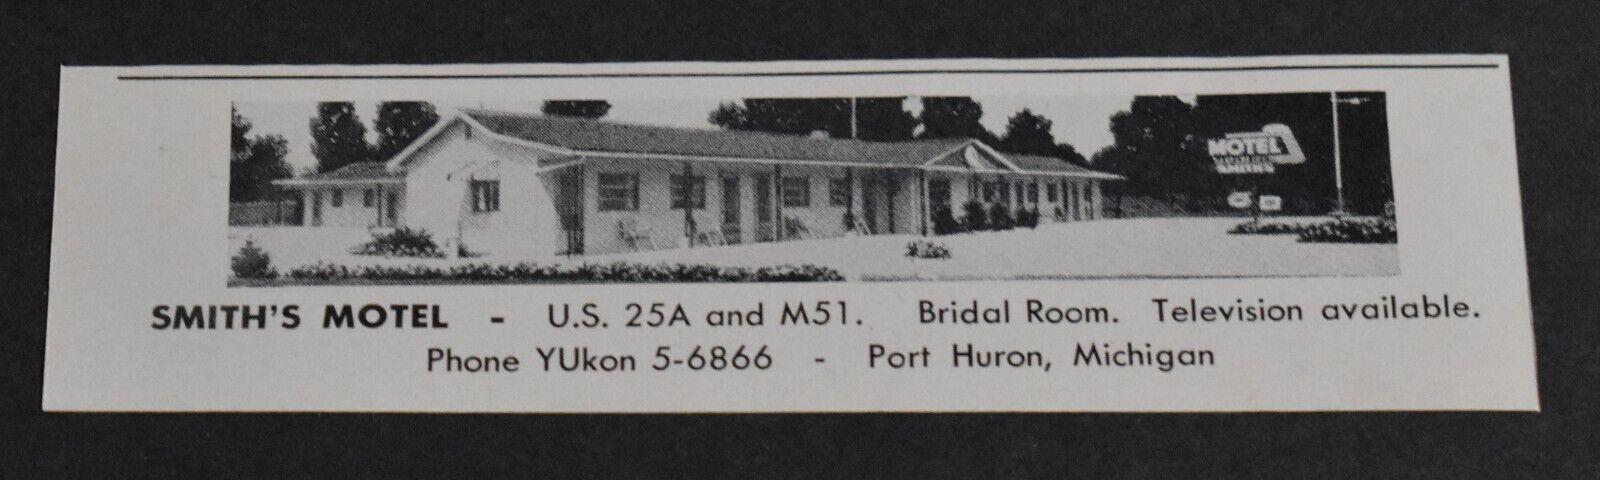 1954 Print Ad Michigan Port Huron Smith's Motel Bridal Room US-25A M-51 Art